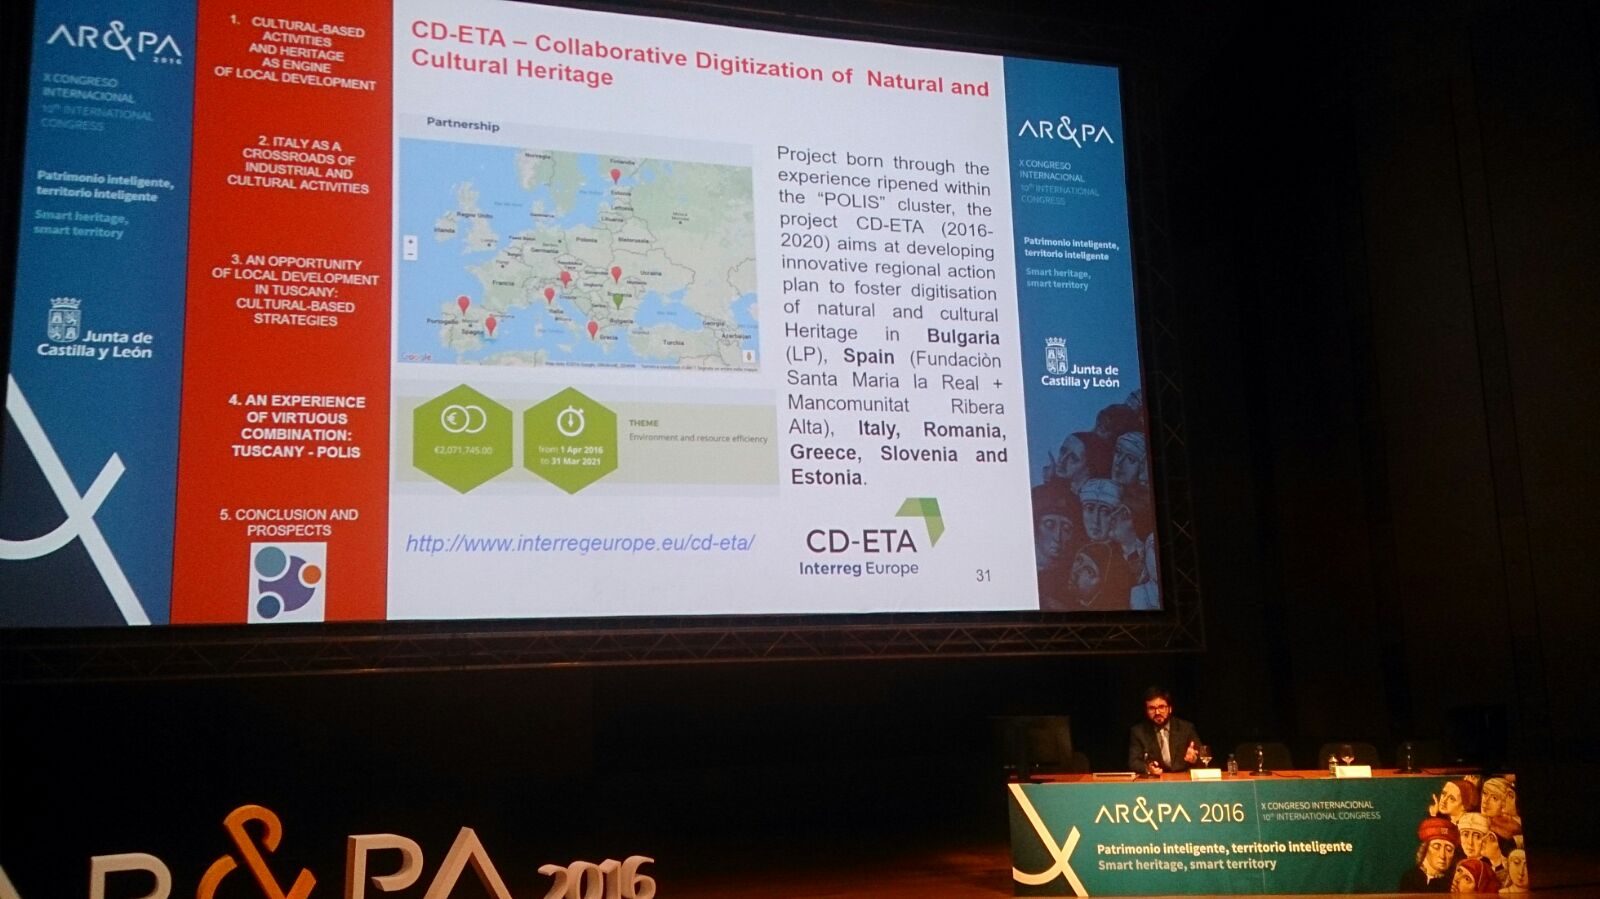 CD-ETA and “AR&PA” International Conference 